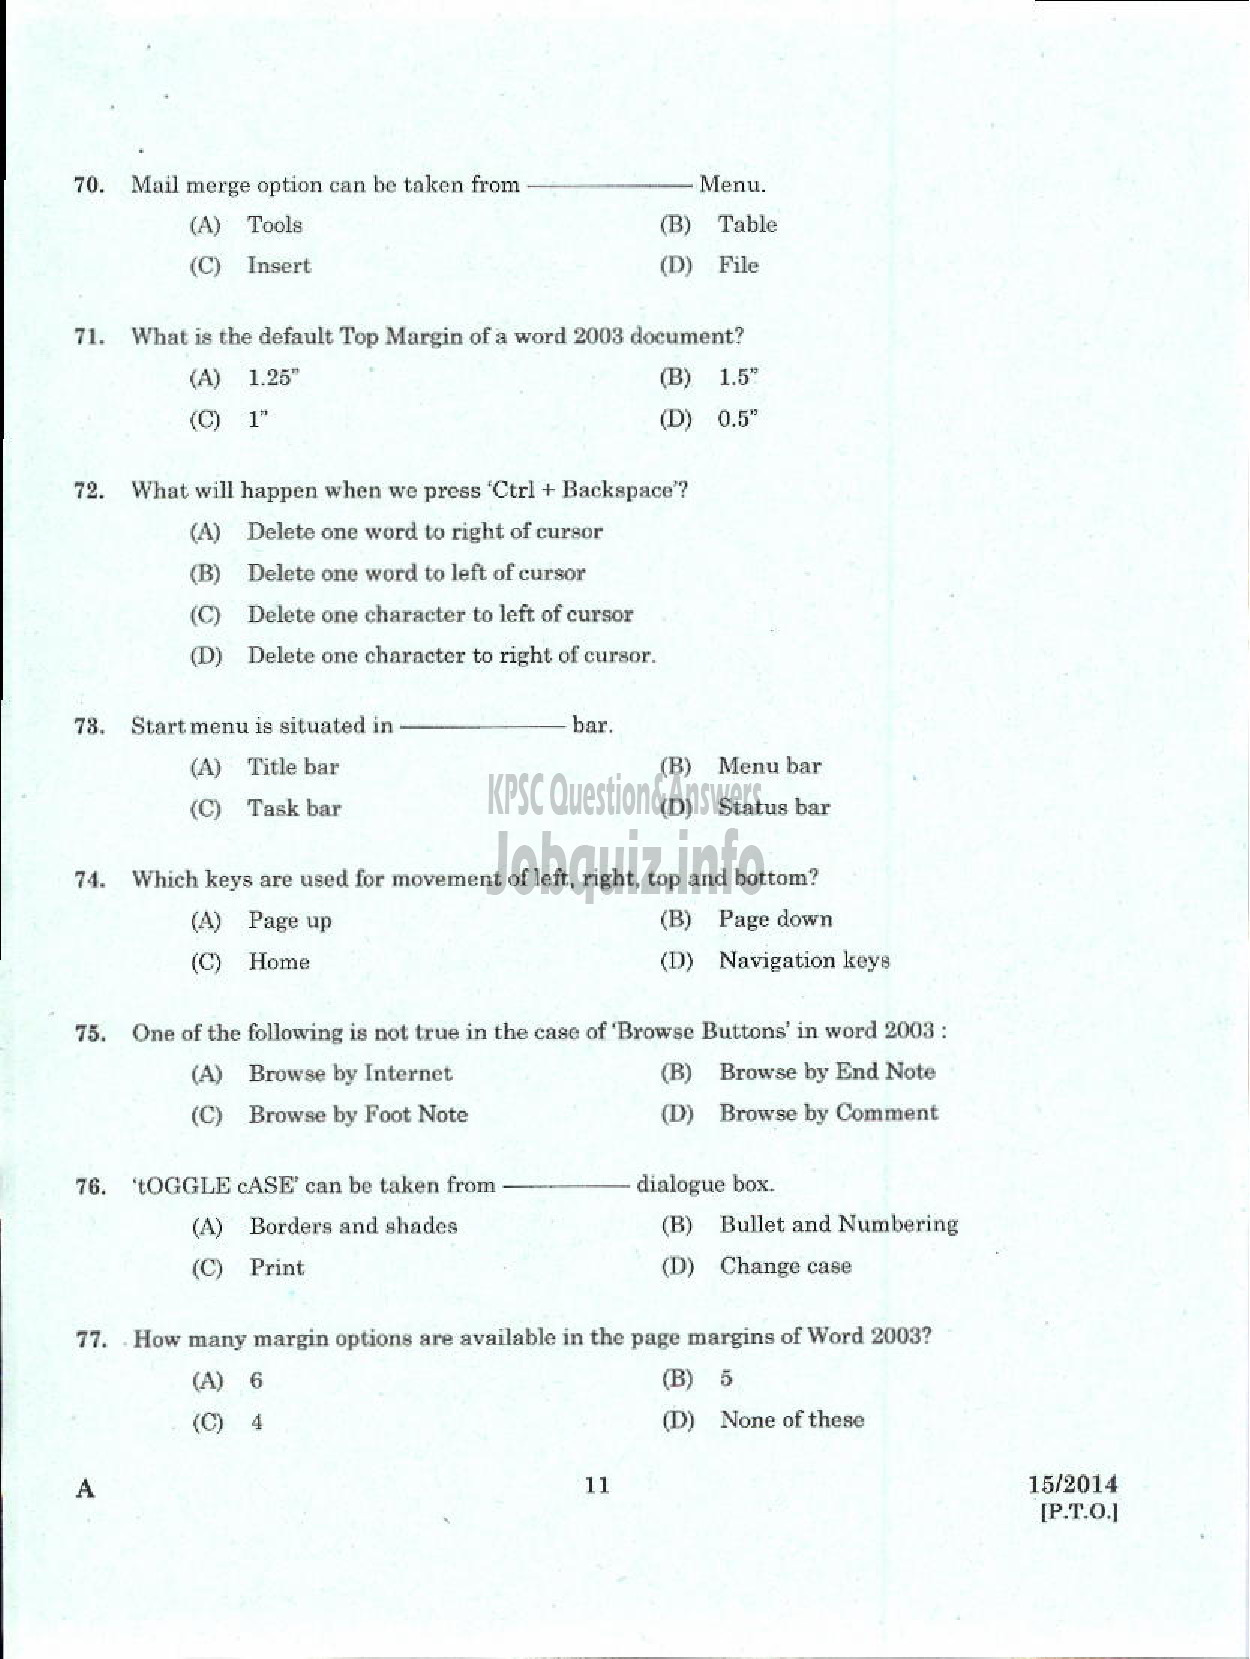 Kerala PSC Question Paper - LOWER DIVISION TYPIST SR FOR SC/ST VARIOUS-9